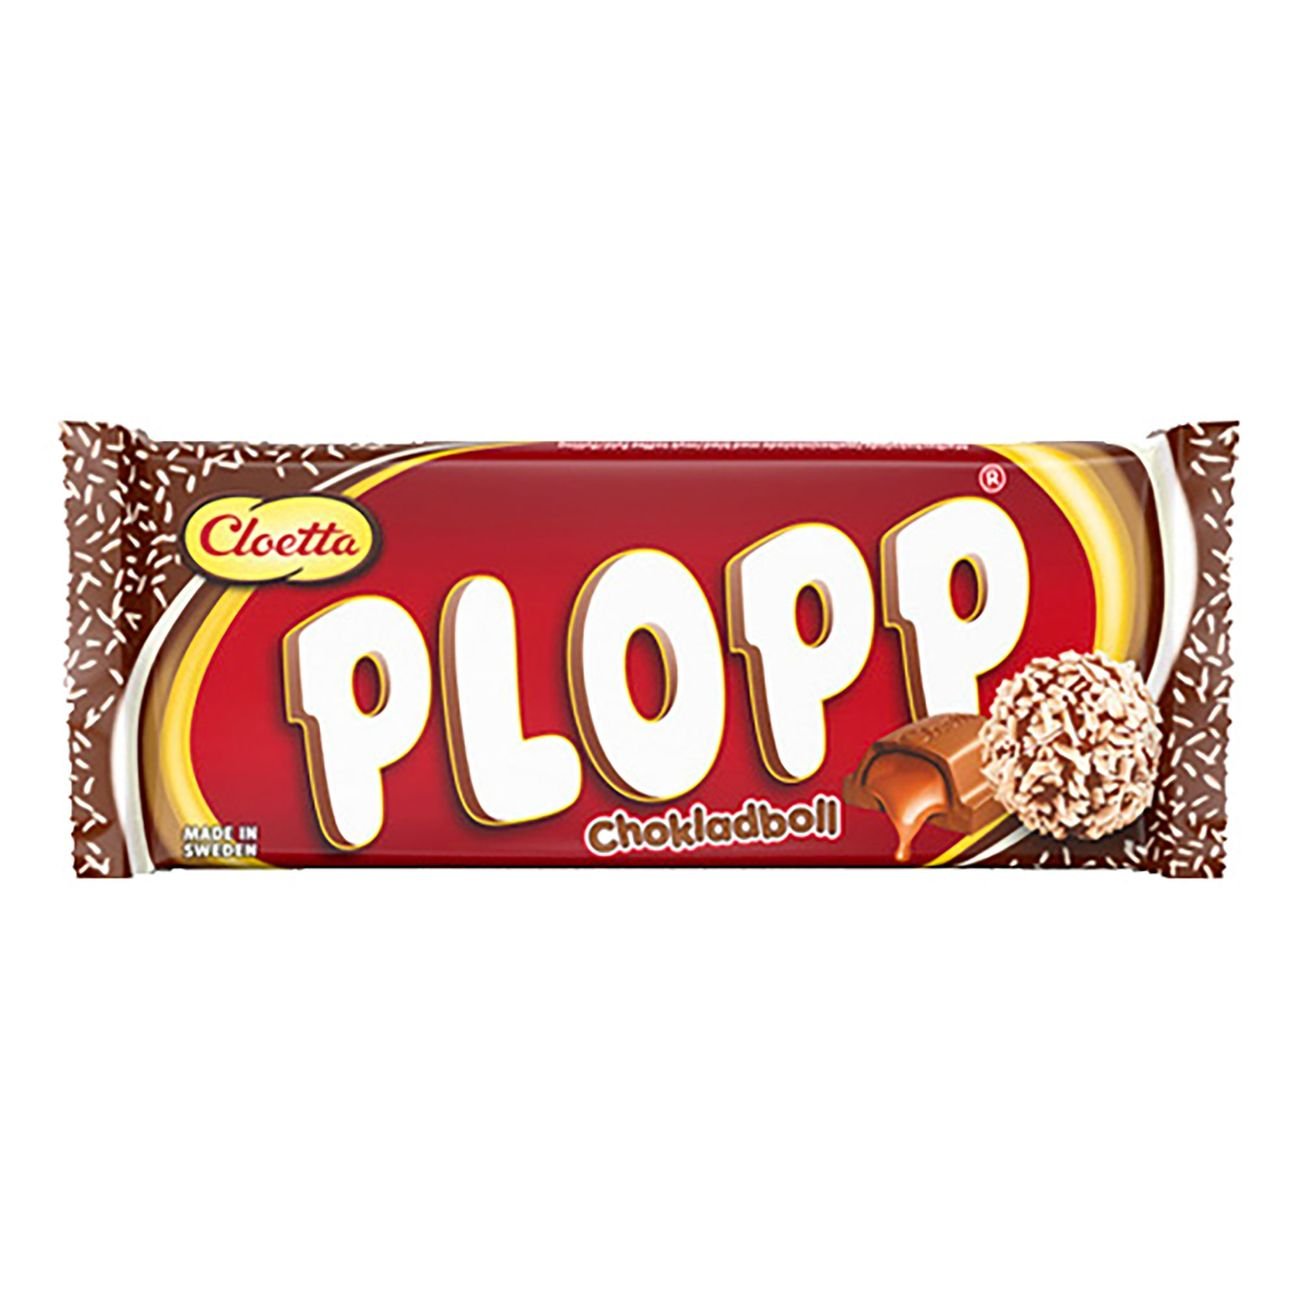 plopp-dubbel-chokladboll-74065-2